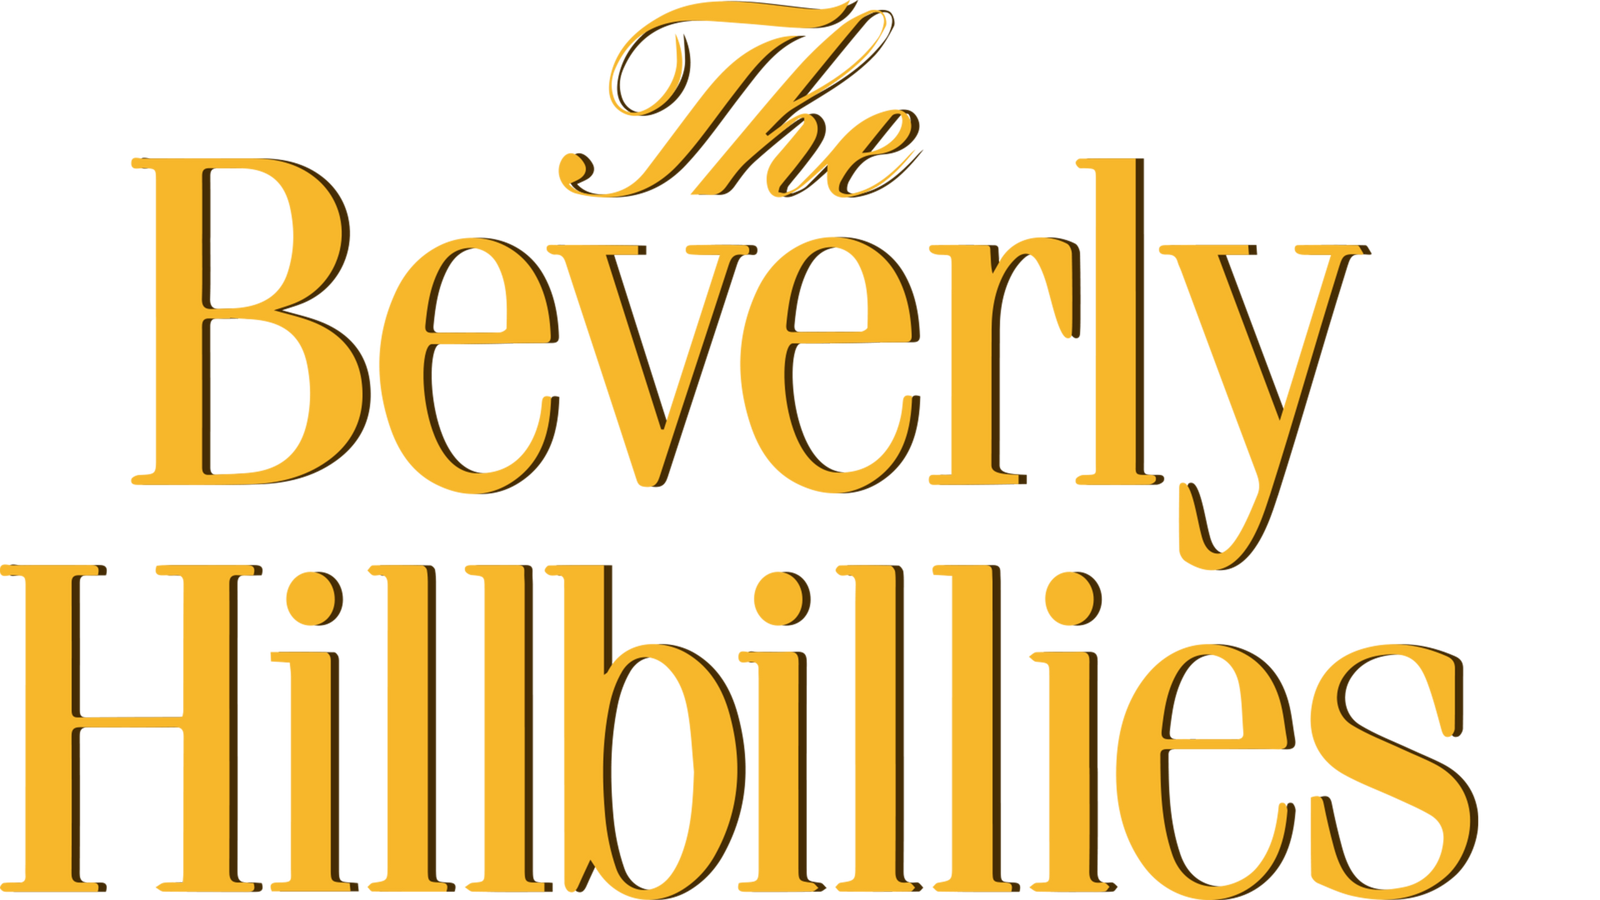 Beverly Hillbillies logo.